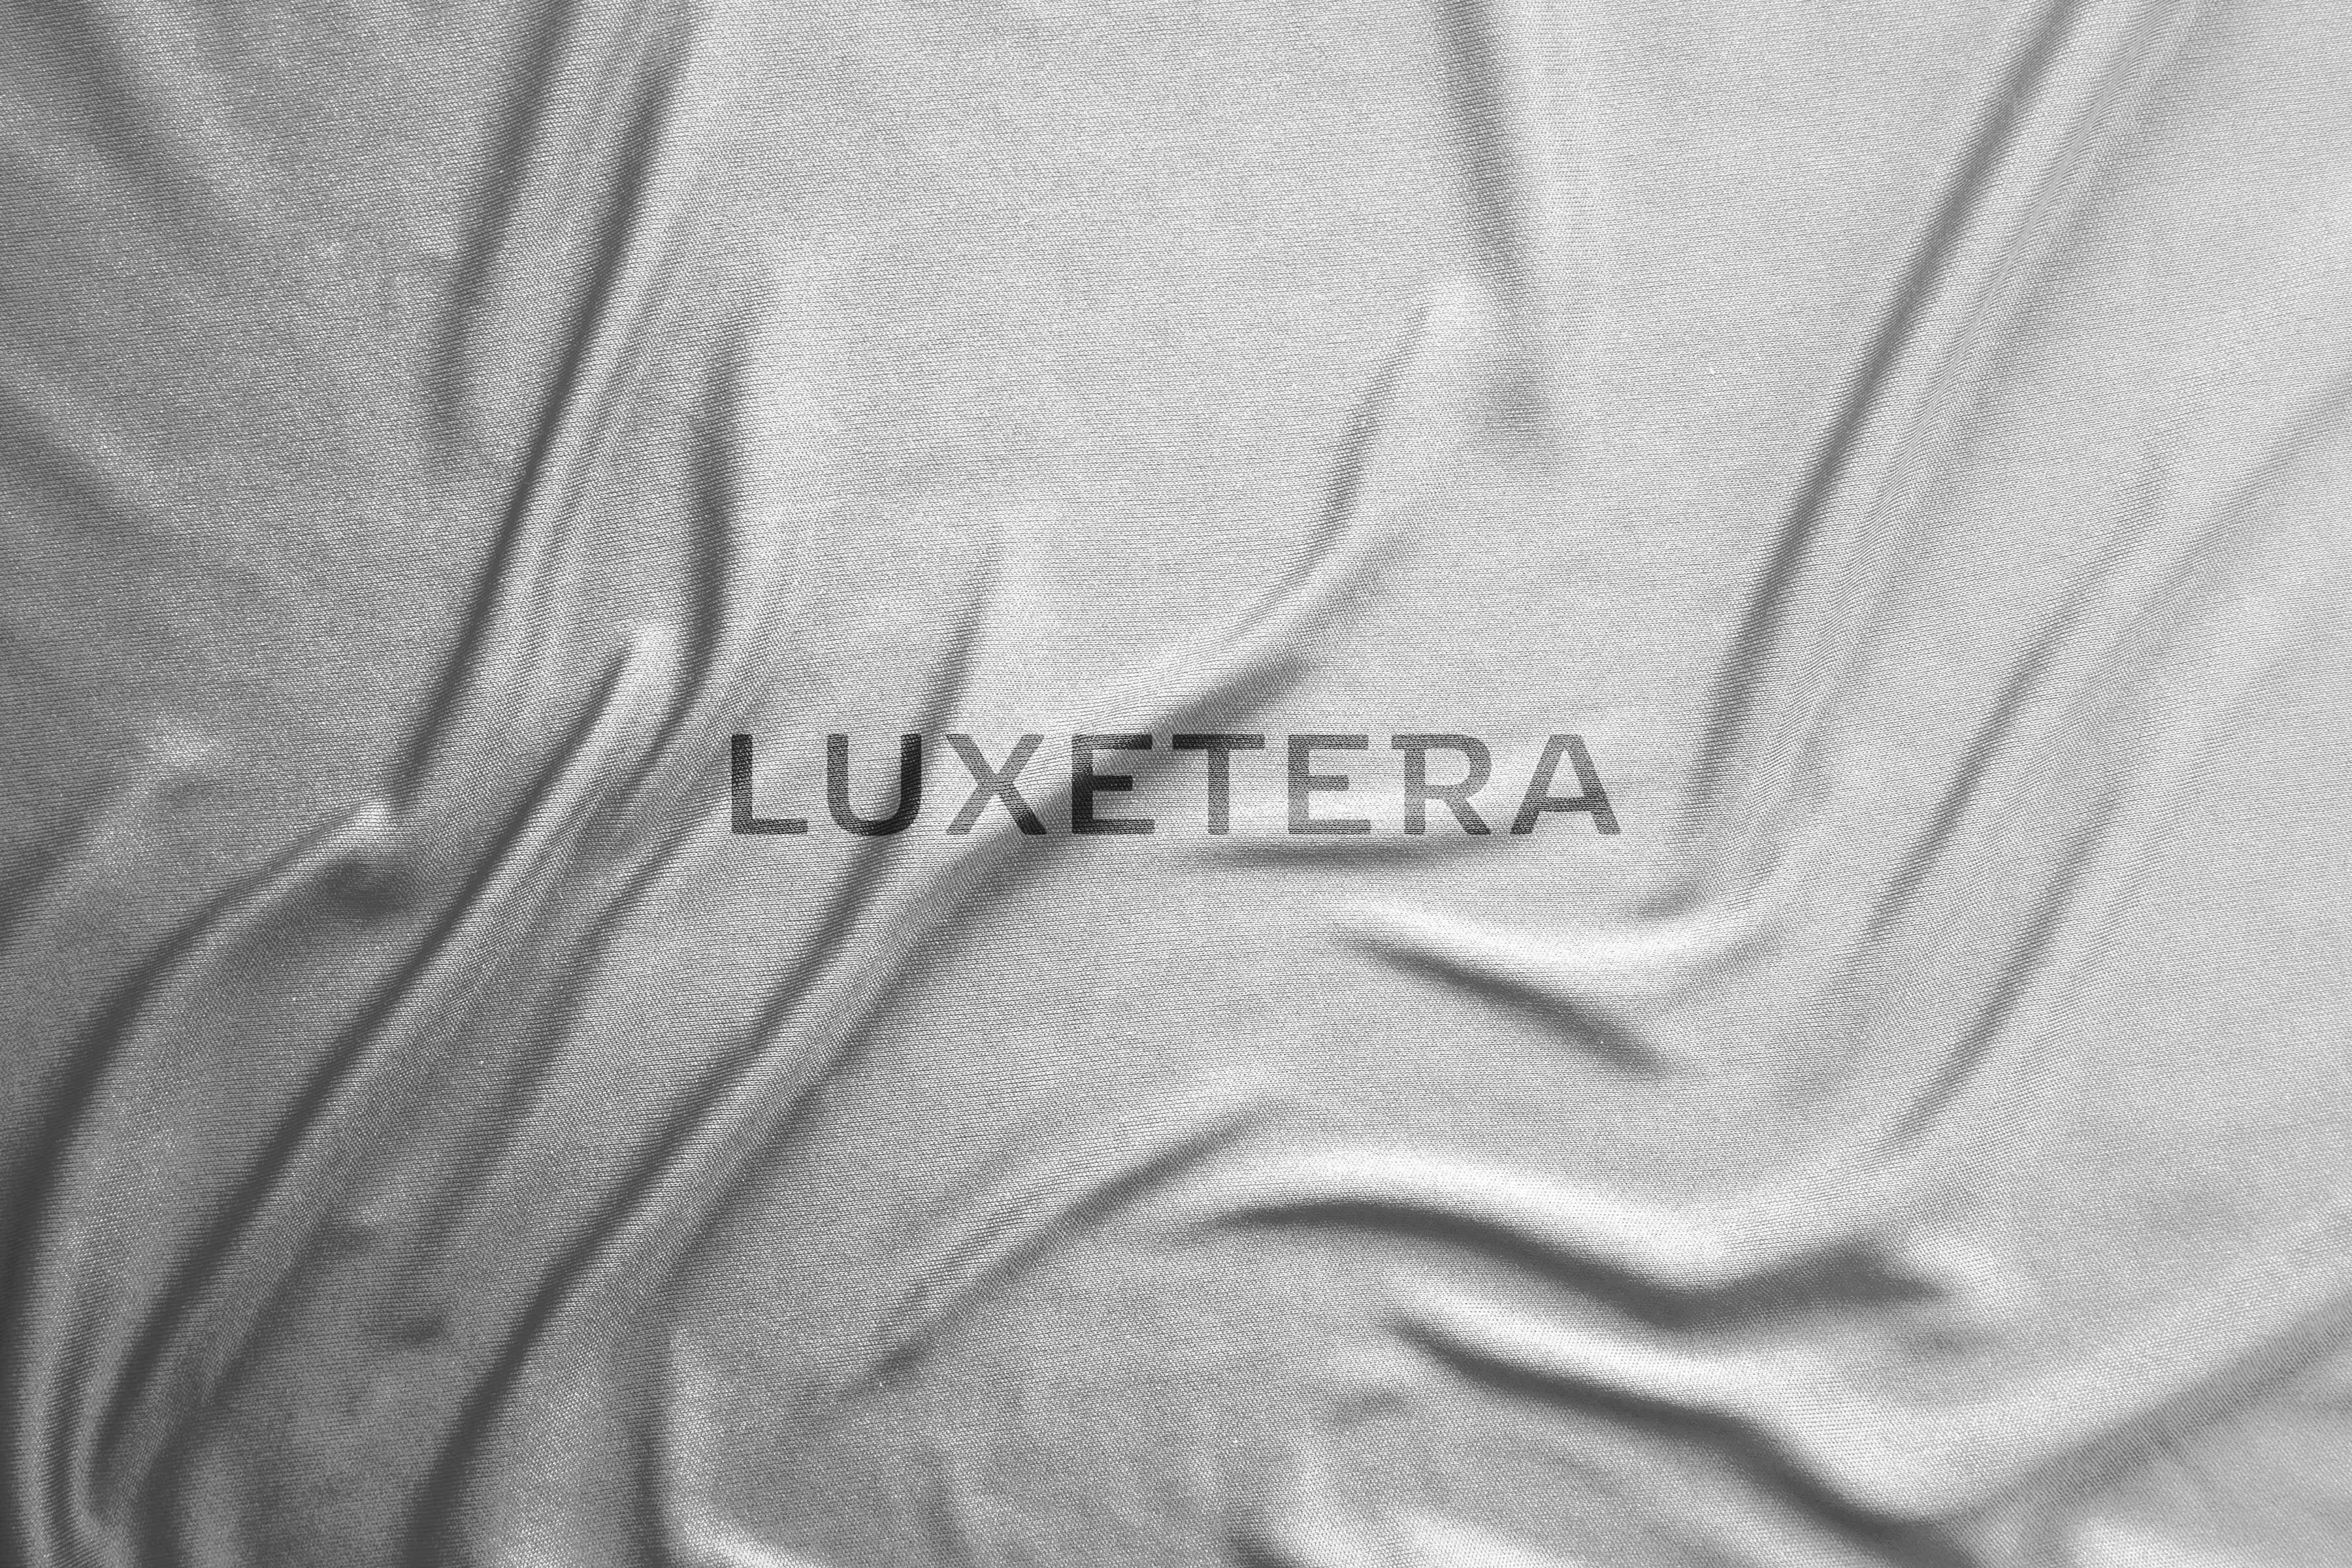 Luxetera - branding by MOQO - logo